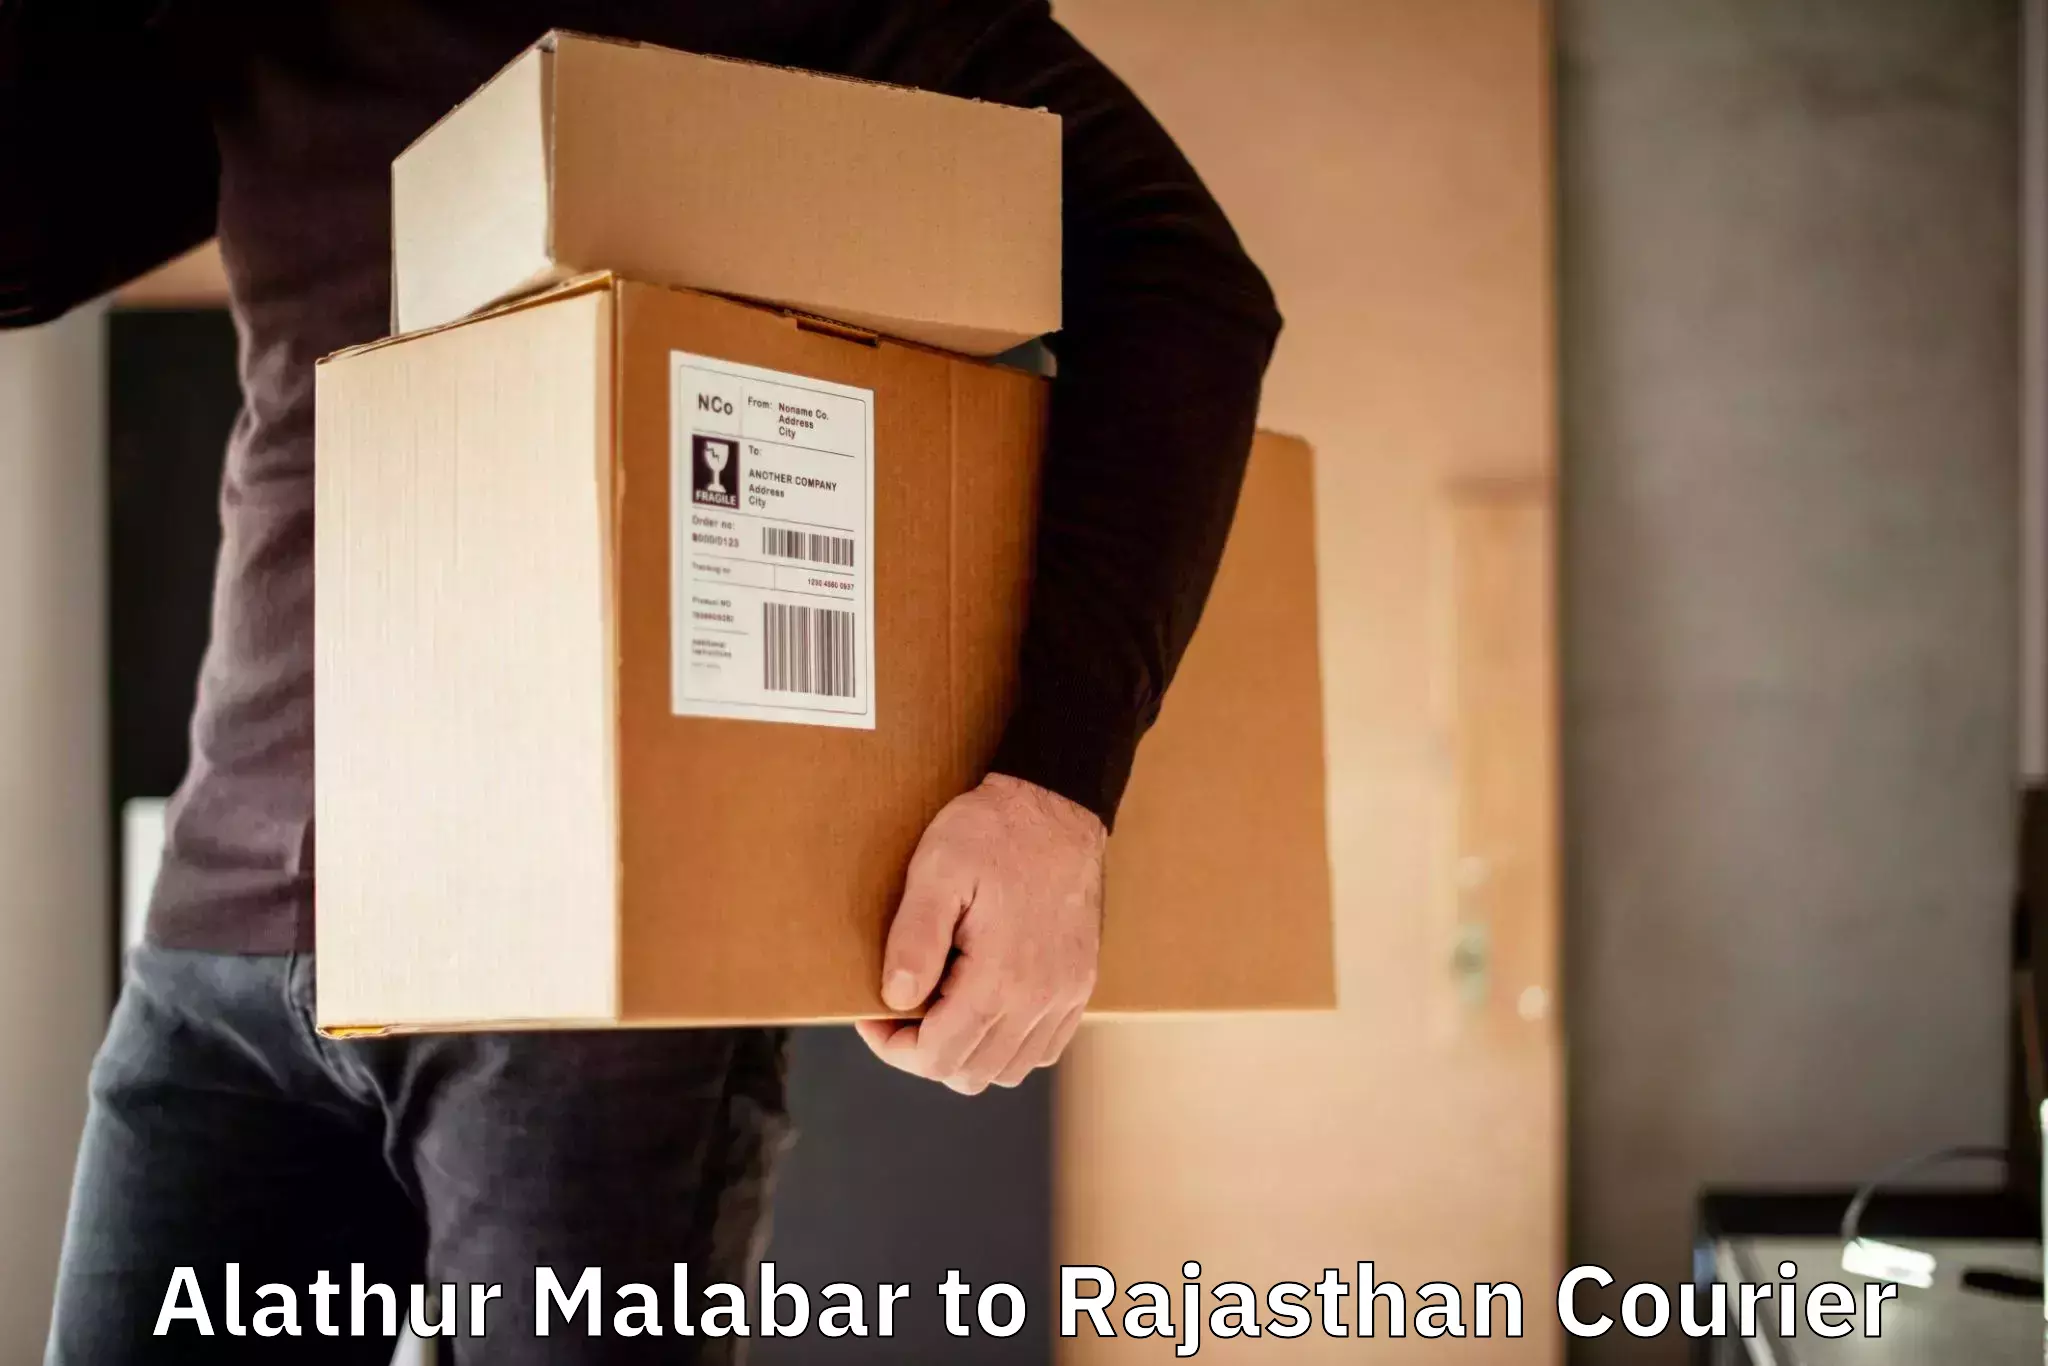 Modern delivery methods Alathur Malabar to Bikaner